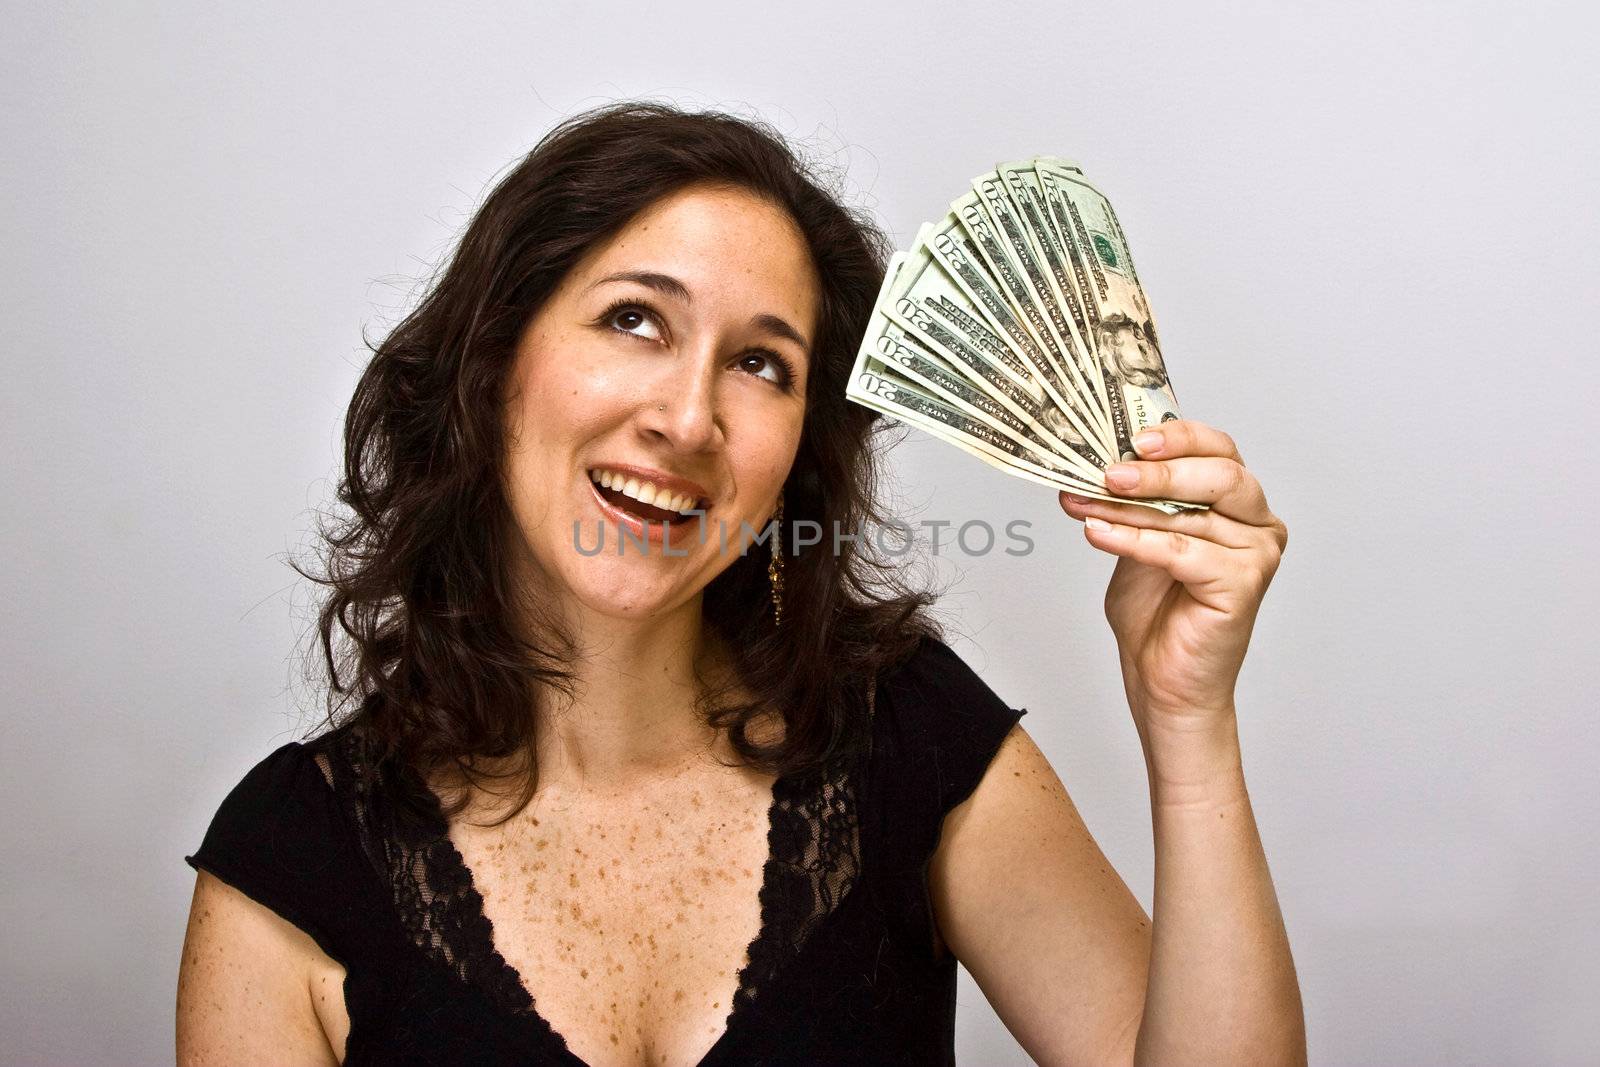 Woman with a money saving idea